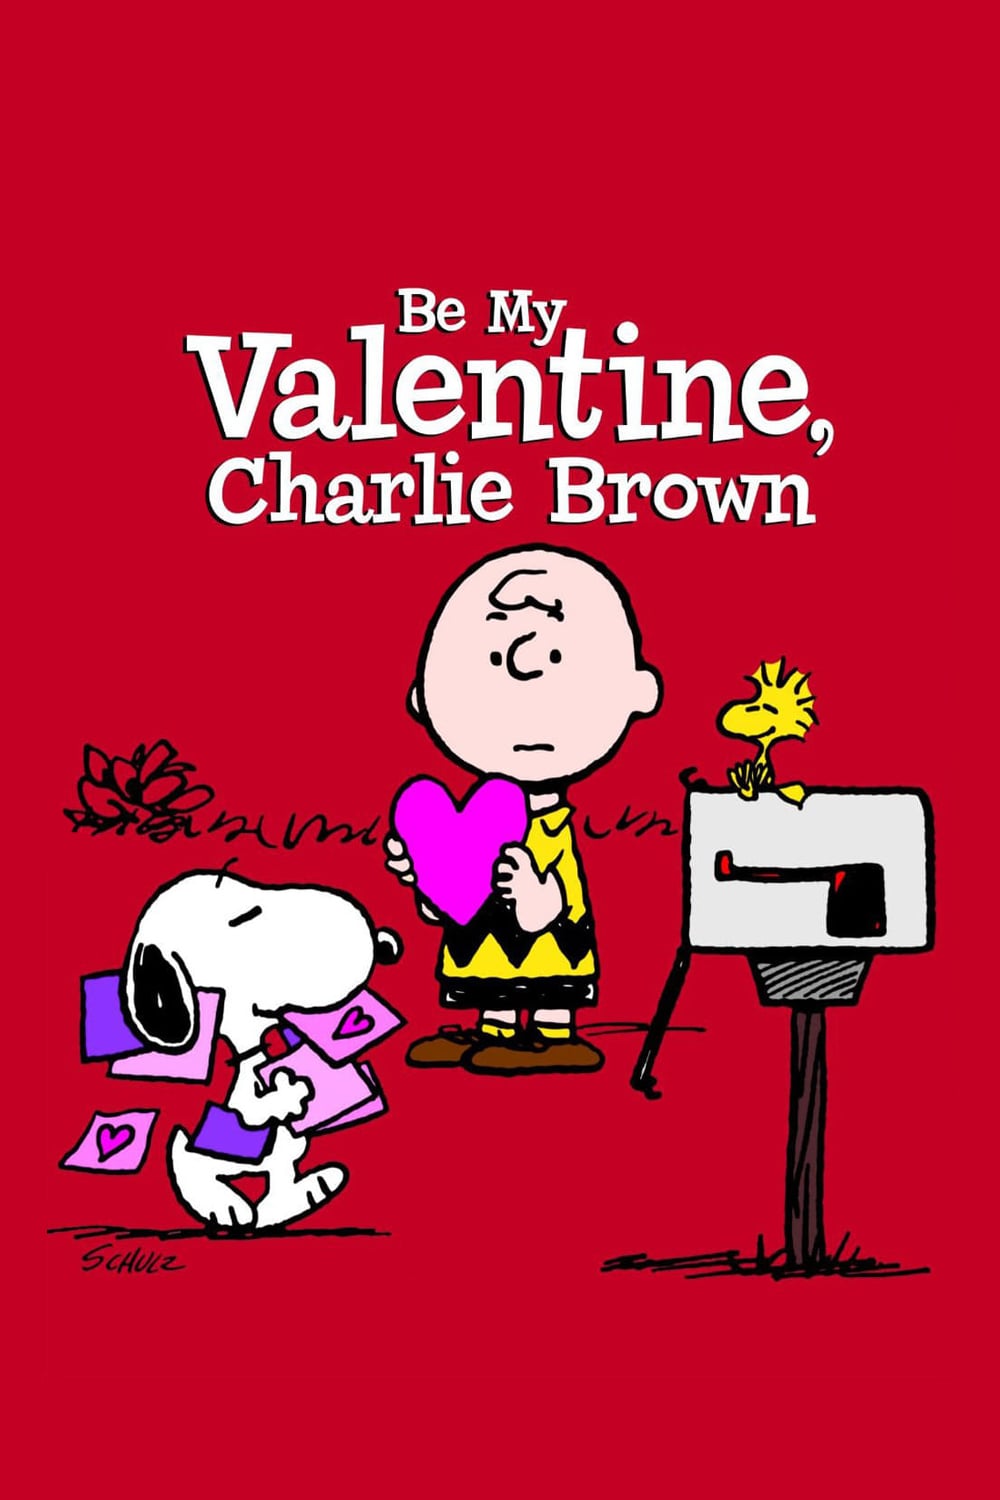 BE MY VALENTINE, CHARLIE BROWN